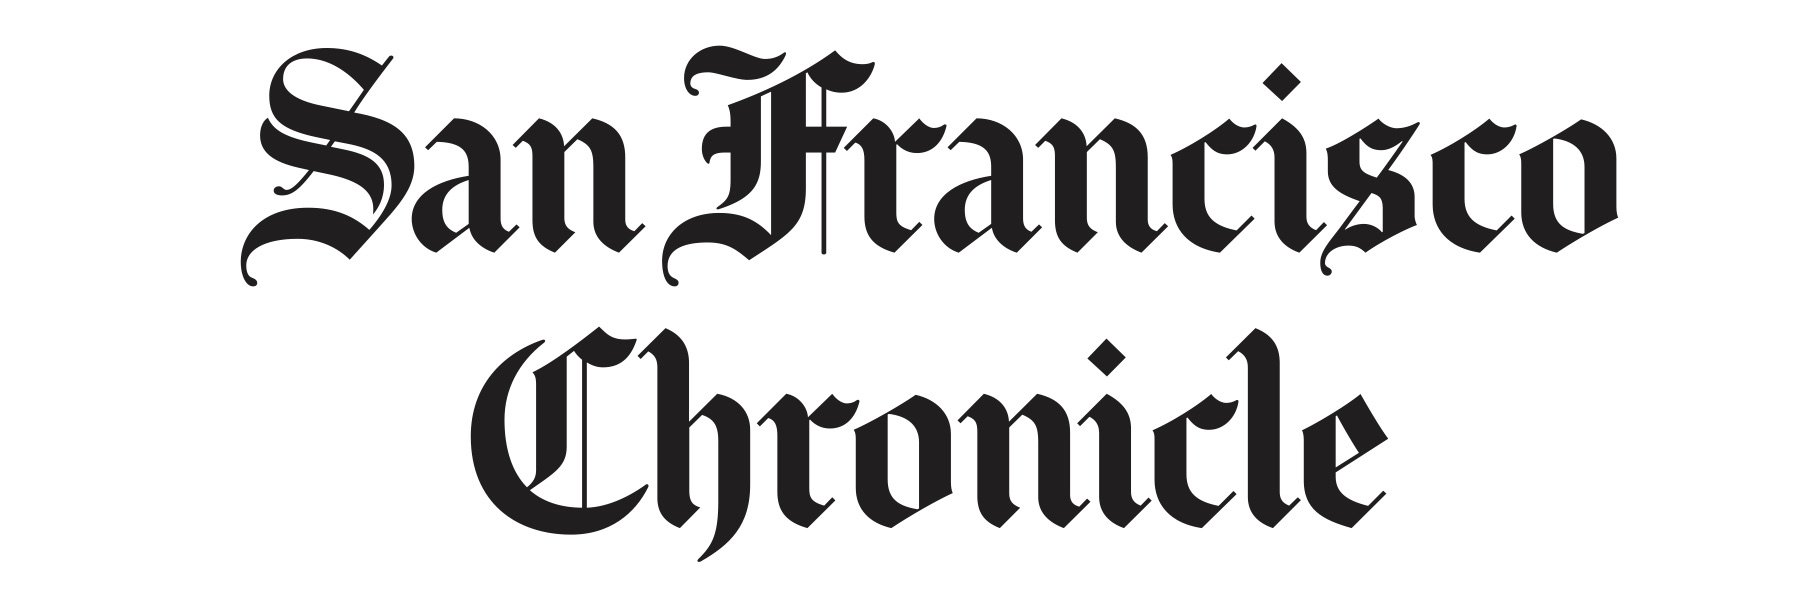 SF-Chronicle-logo.jpeg